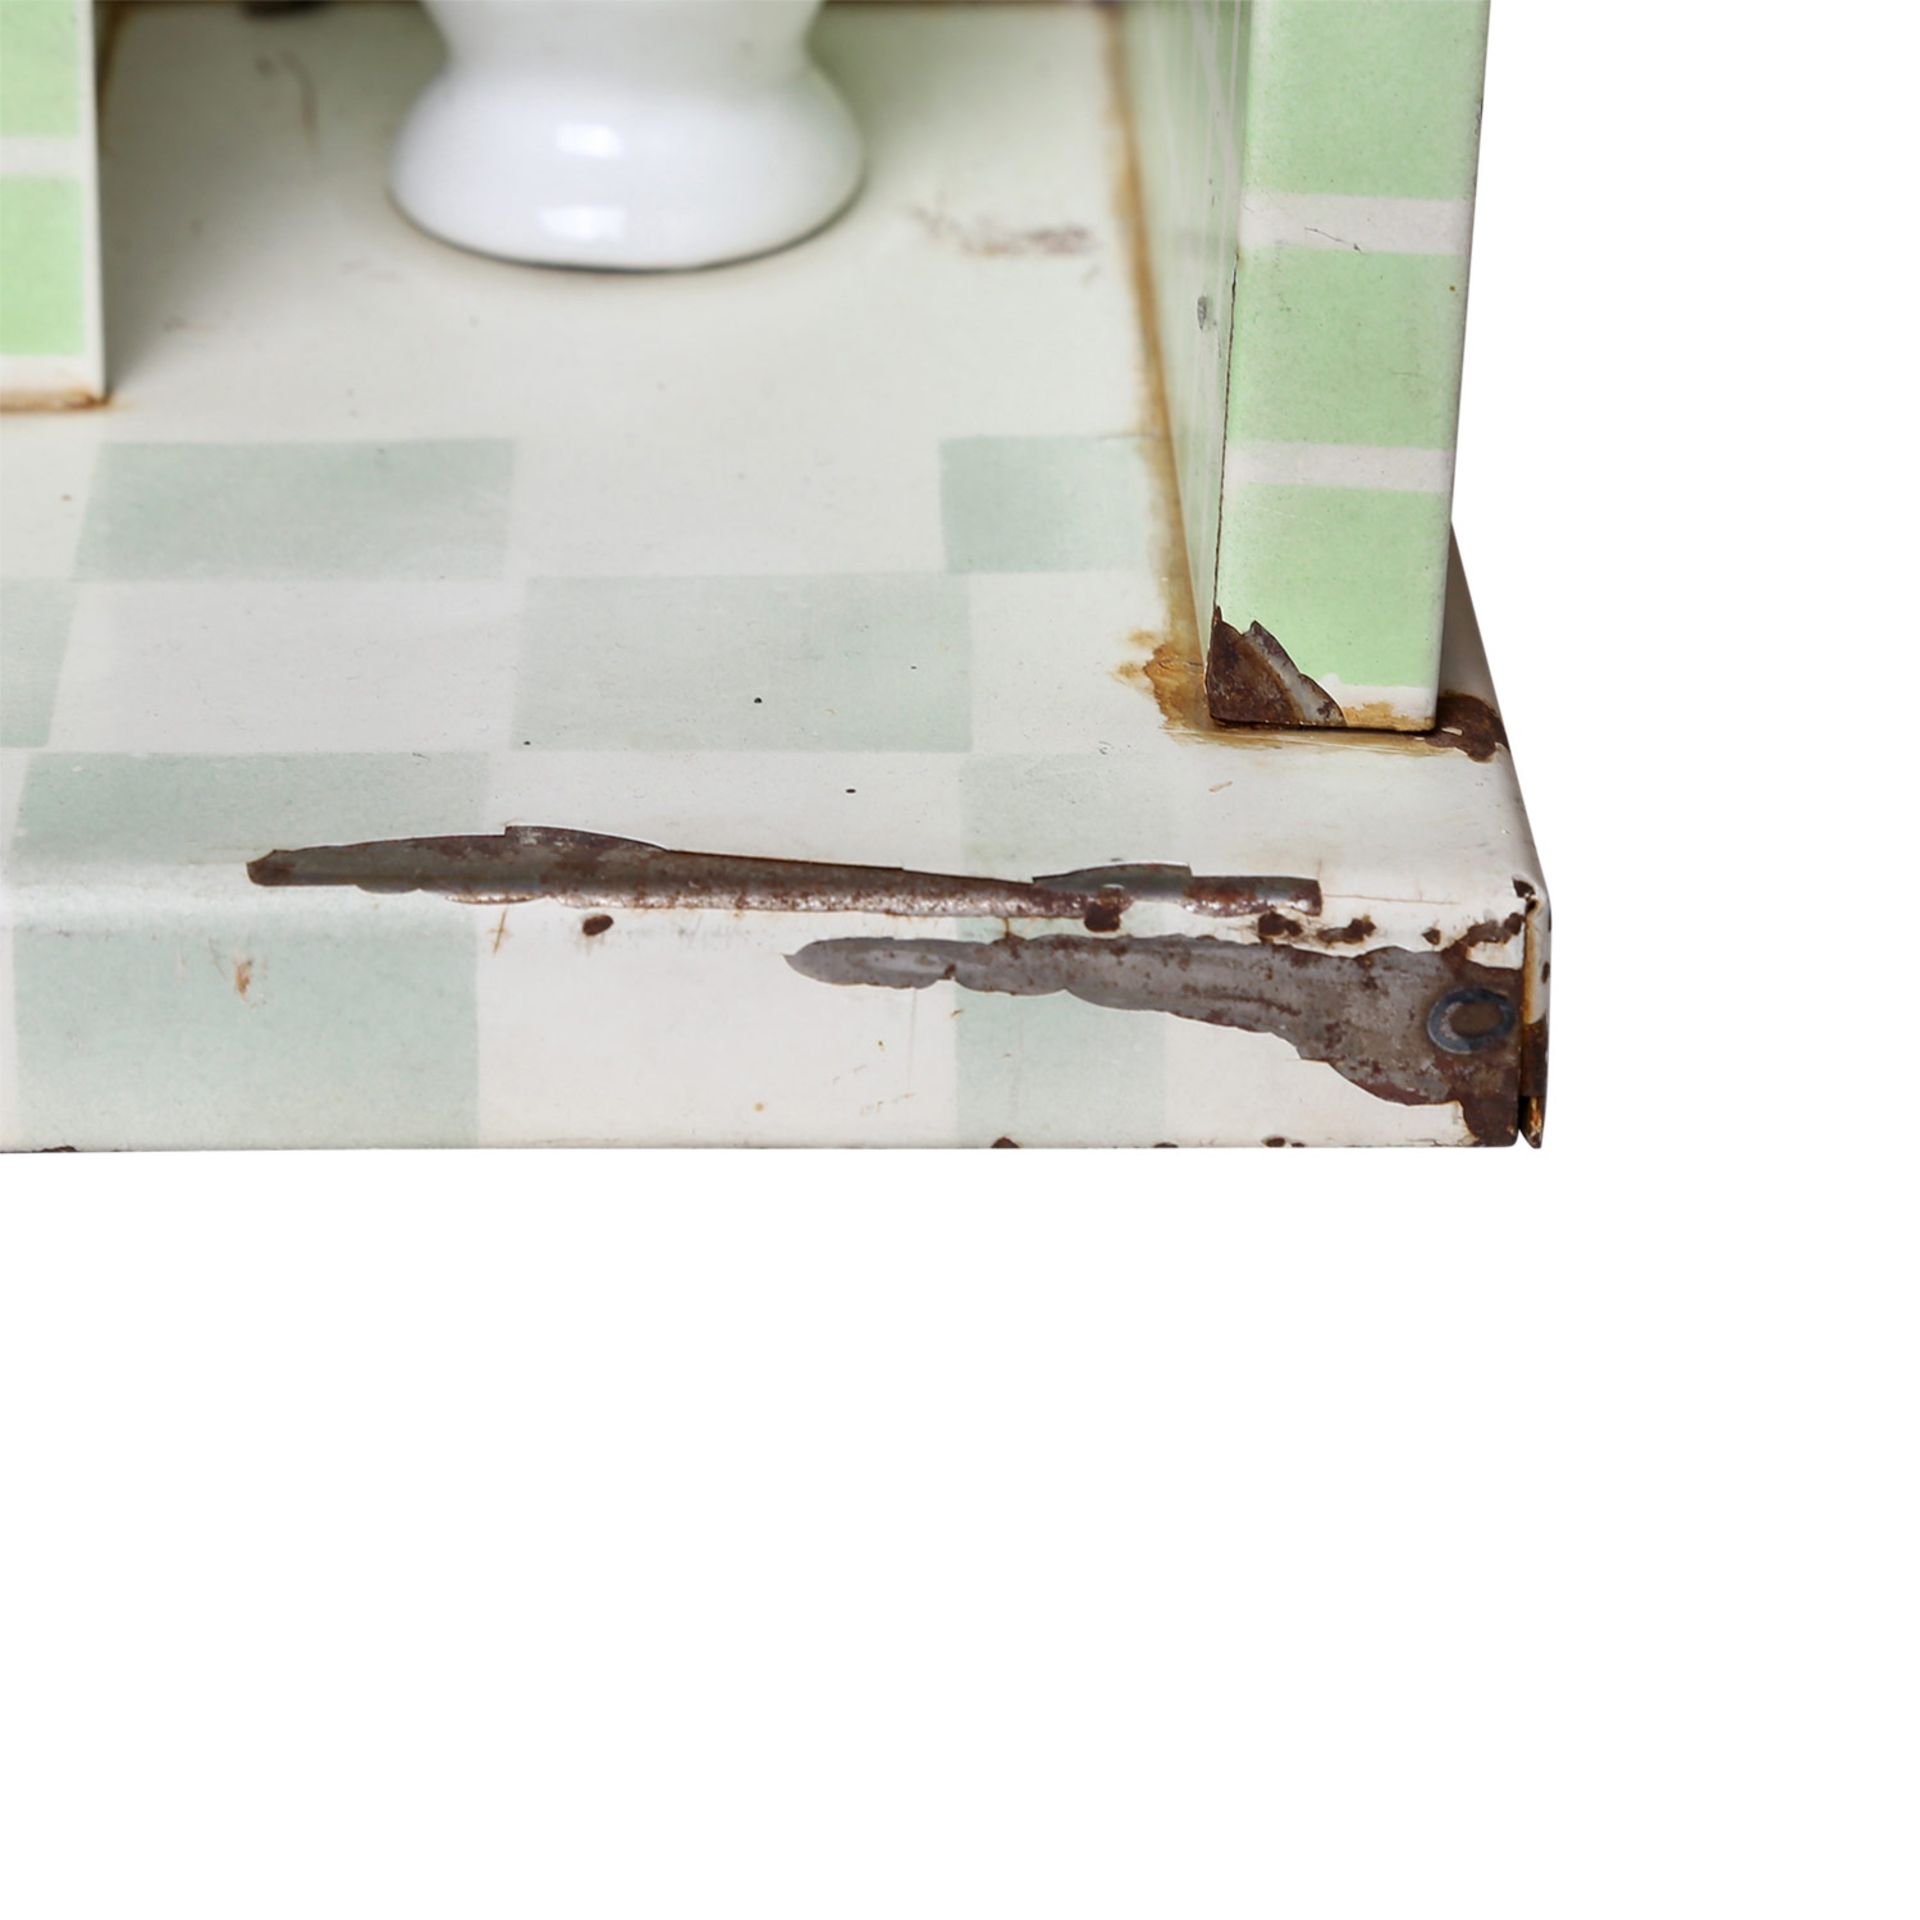 KIBRI Puppenbadezimmer, 1950er Jahre, Blech, beige-grüner Kacheldekor, Toilettenschüssel u. - Image 7 of 7